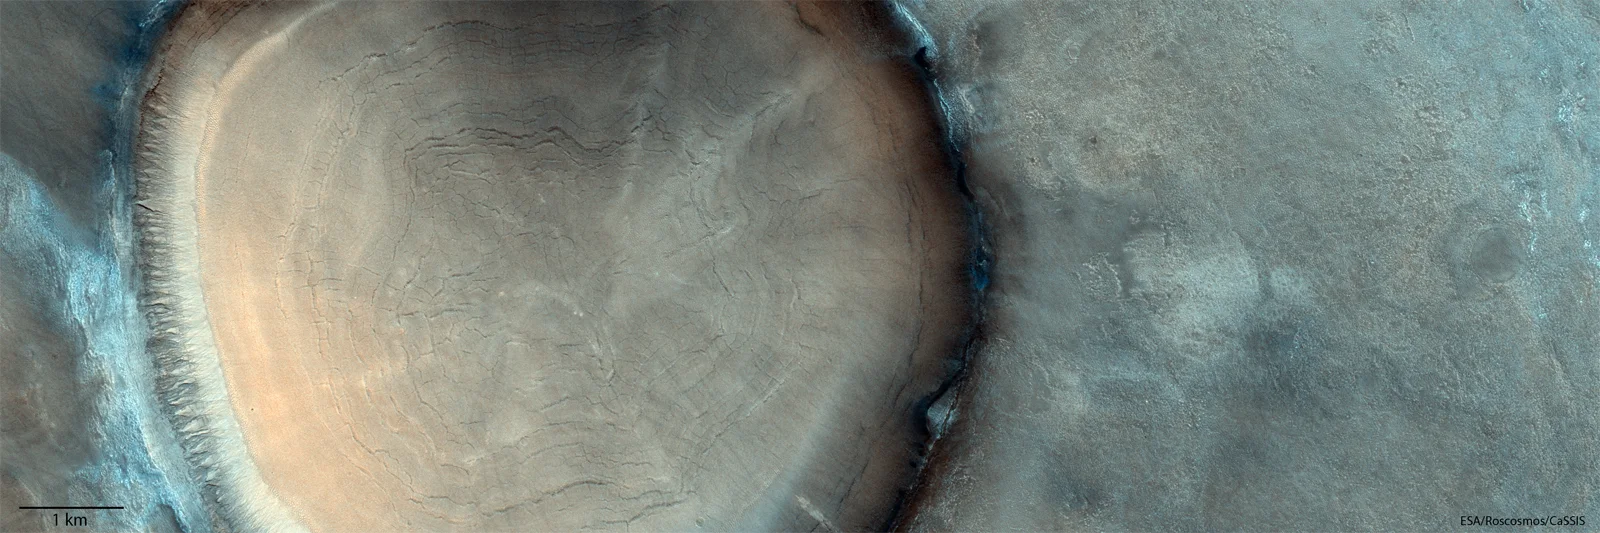 Crater tree rings pillars-ESA Roscosmos CaSSIS